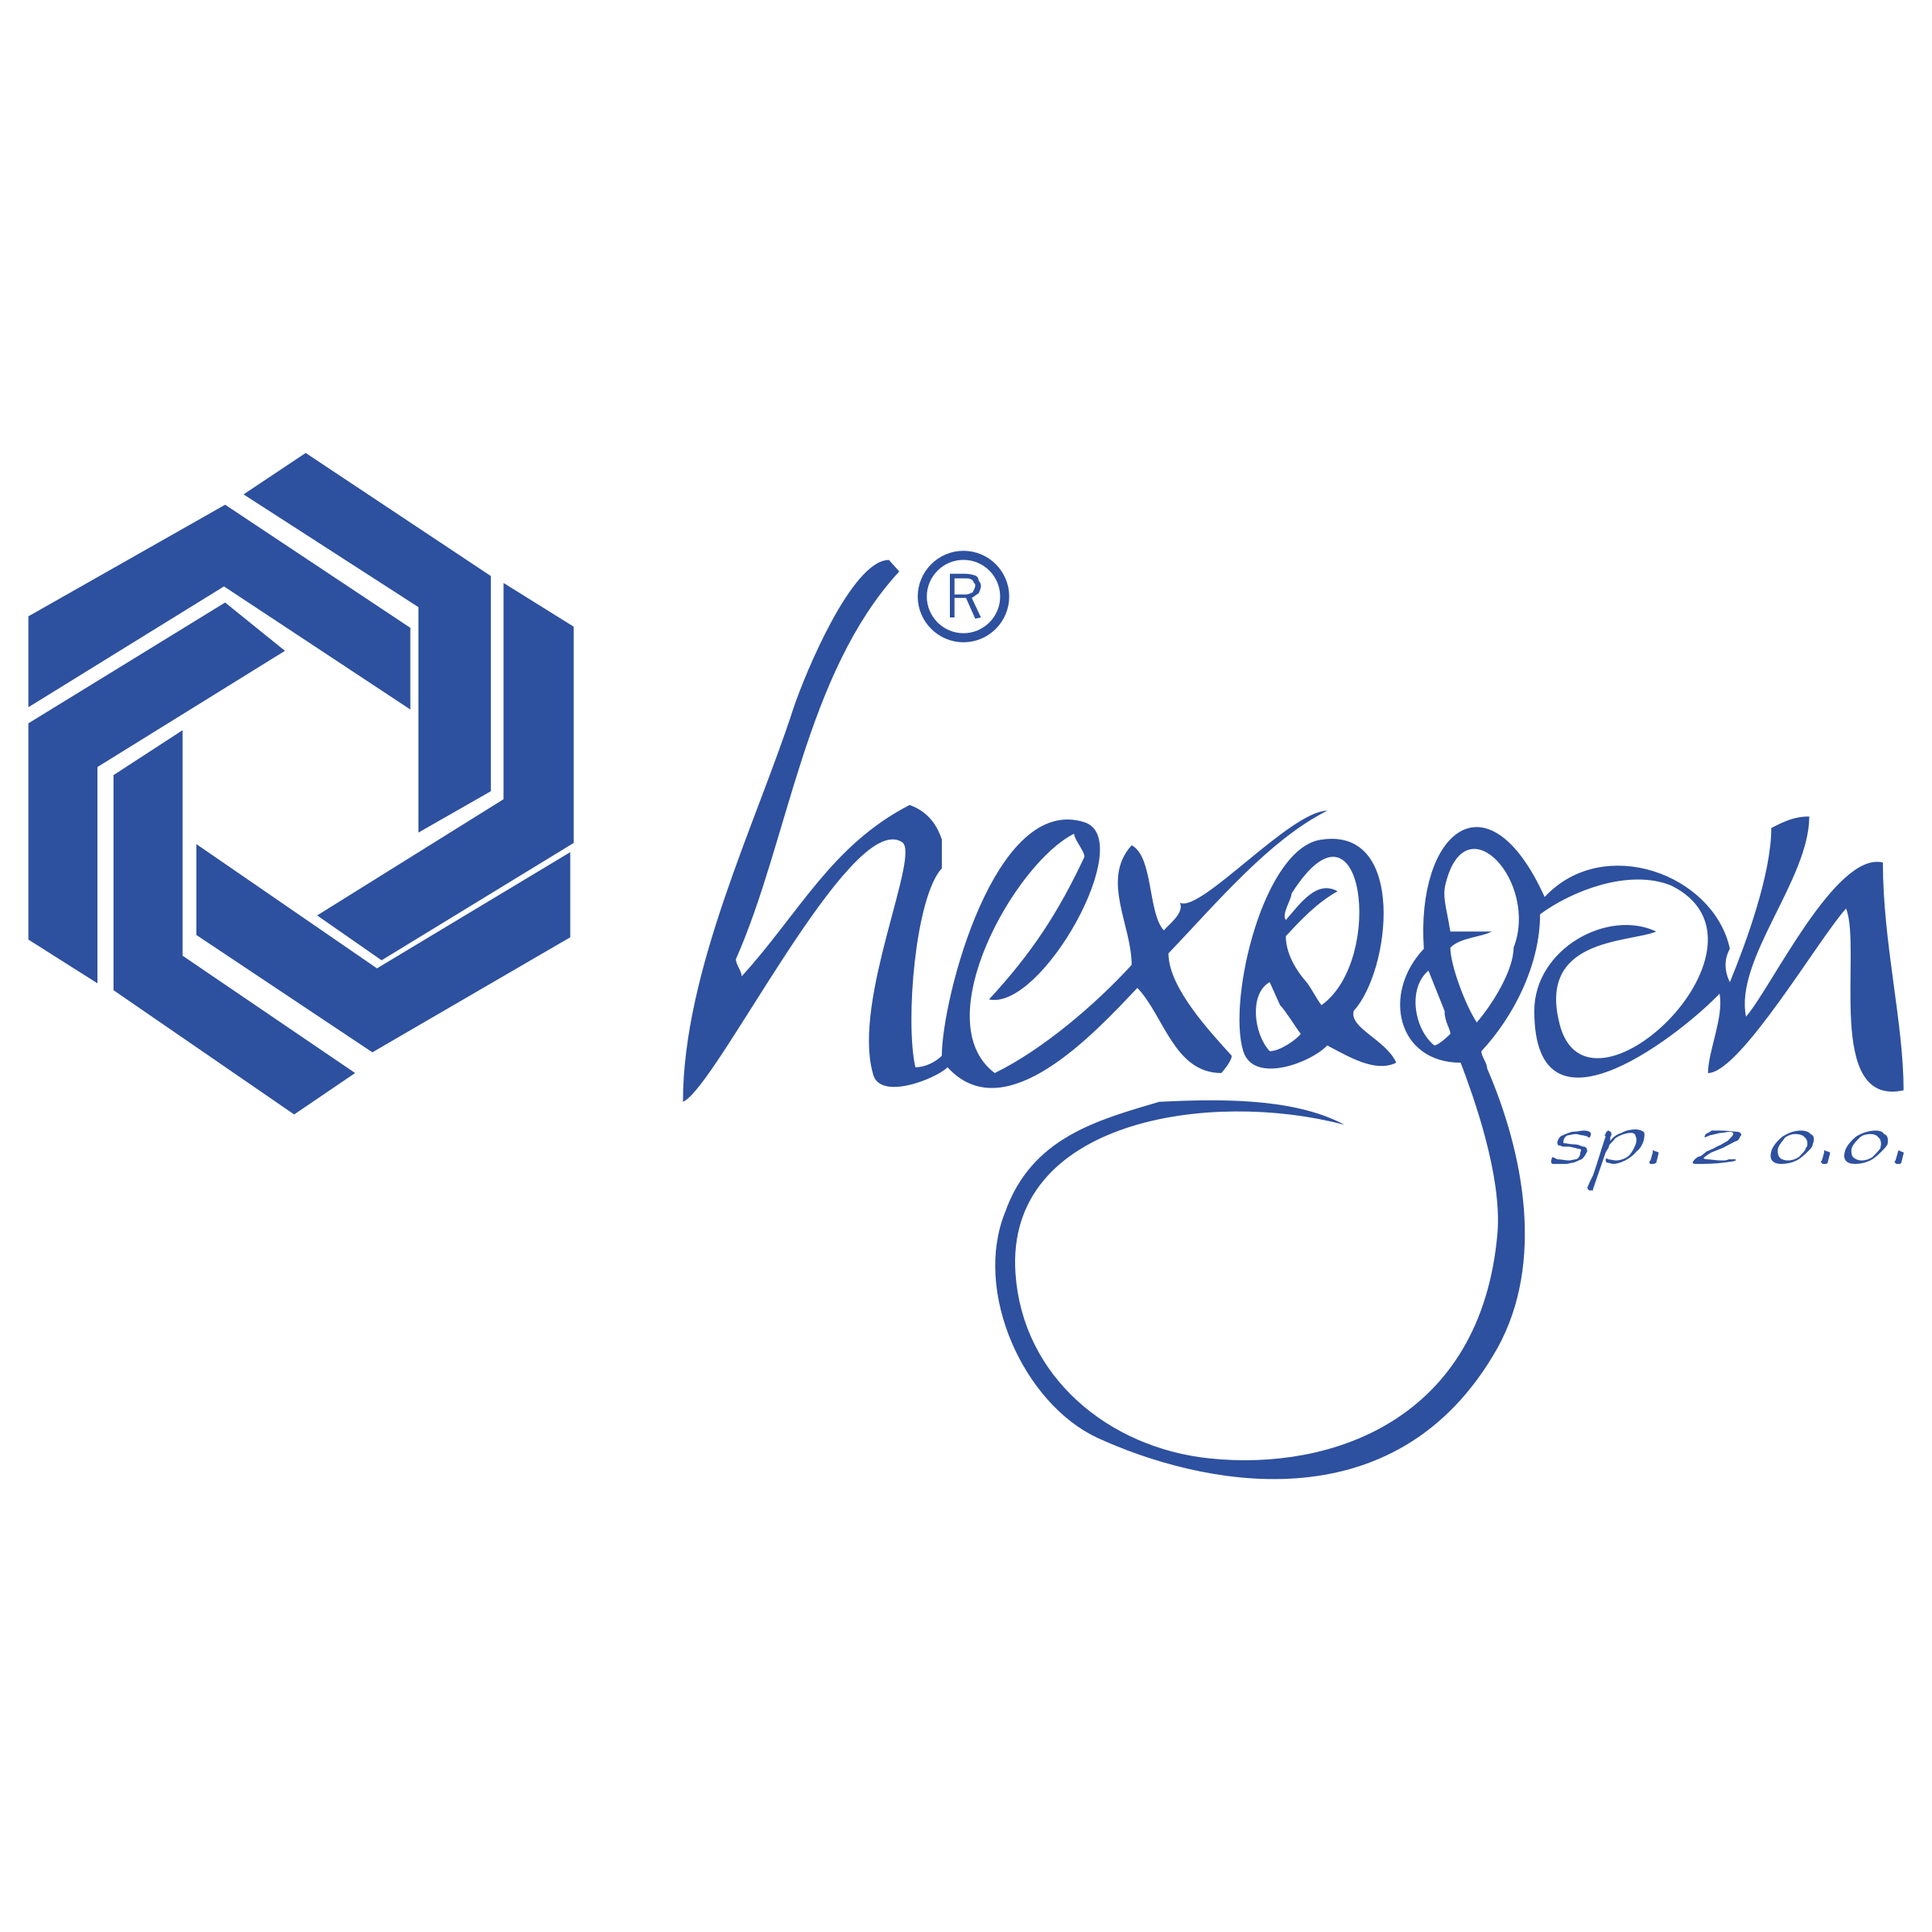 Hexagon Blue Bank Logo - Hexagon Logo PNG Transparent & SVG Vector - Freebie Supply